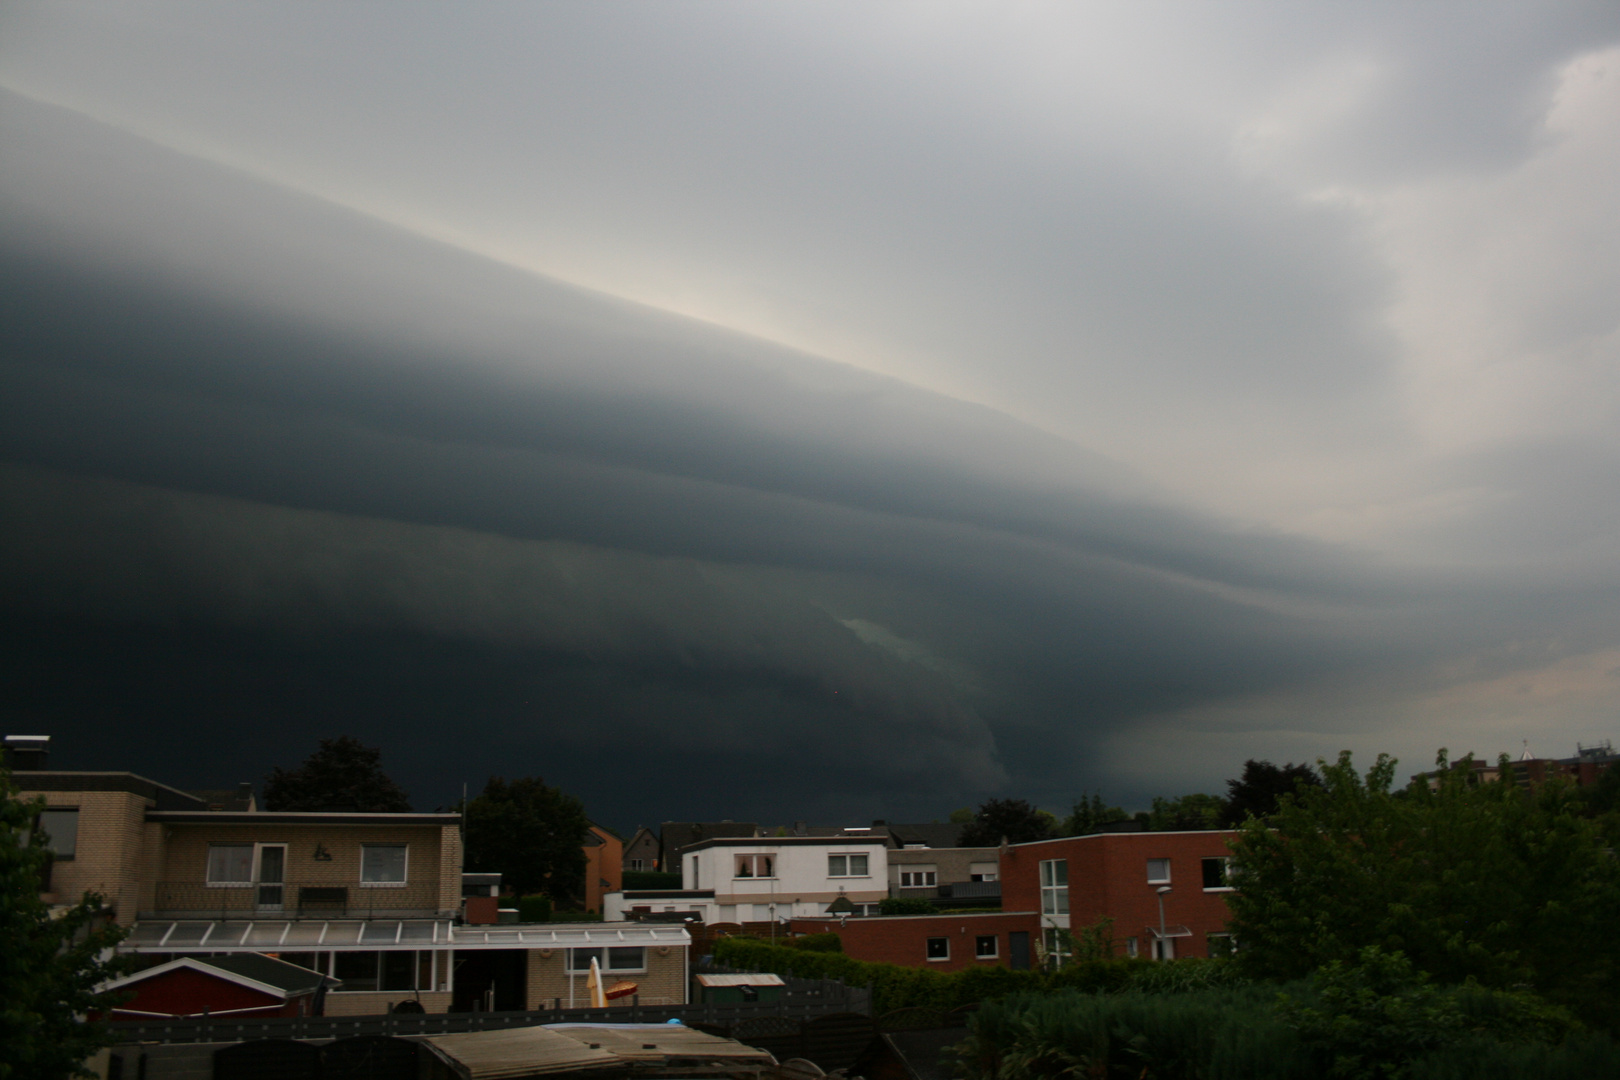 Megacyclone am 09.06.2014 in Bedburg